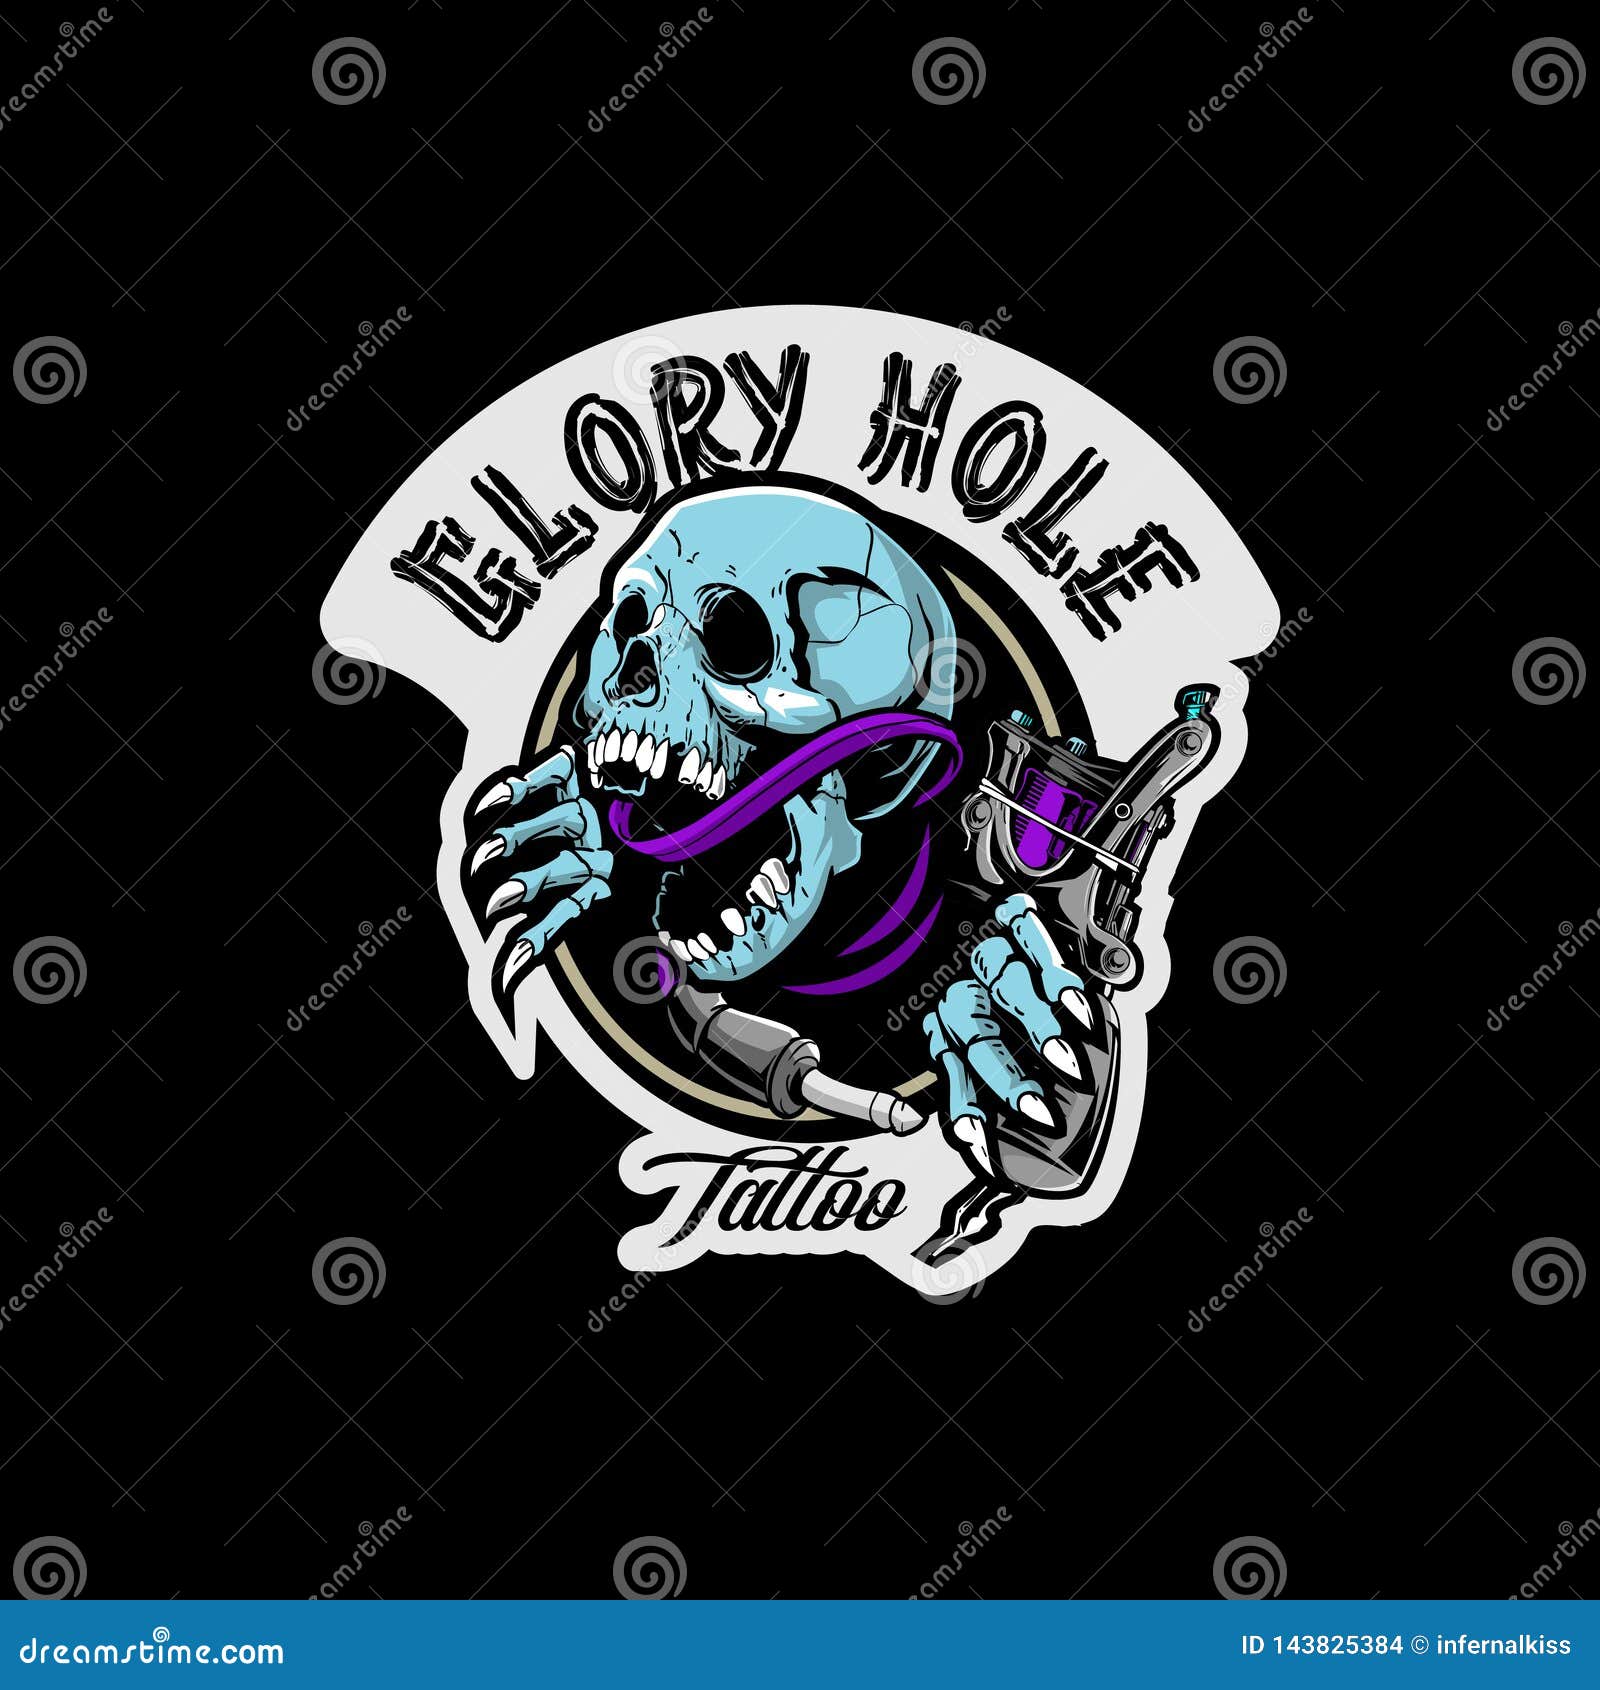 Pirate skull tattoo logo design vector free download